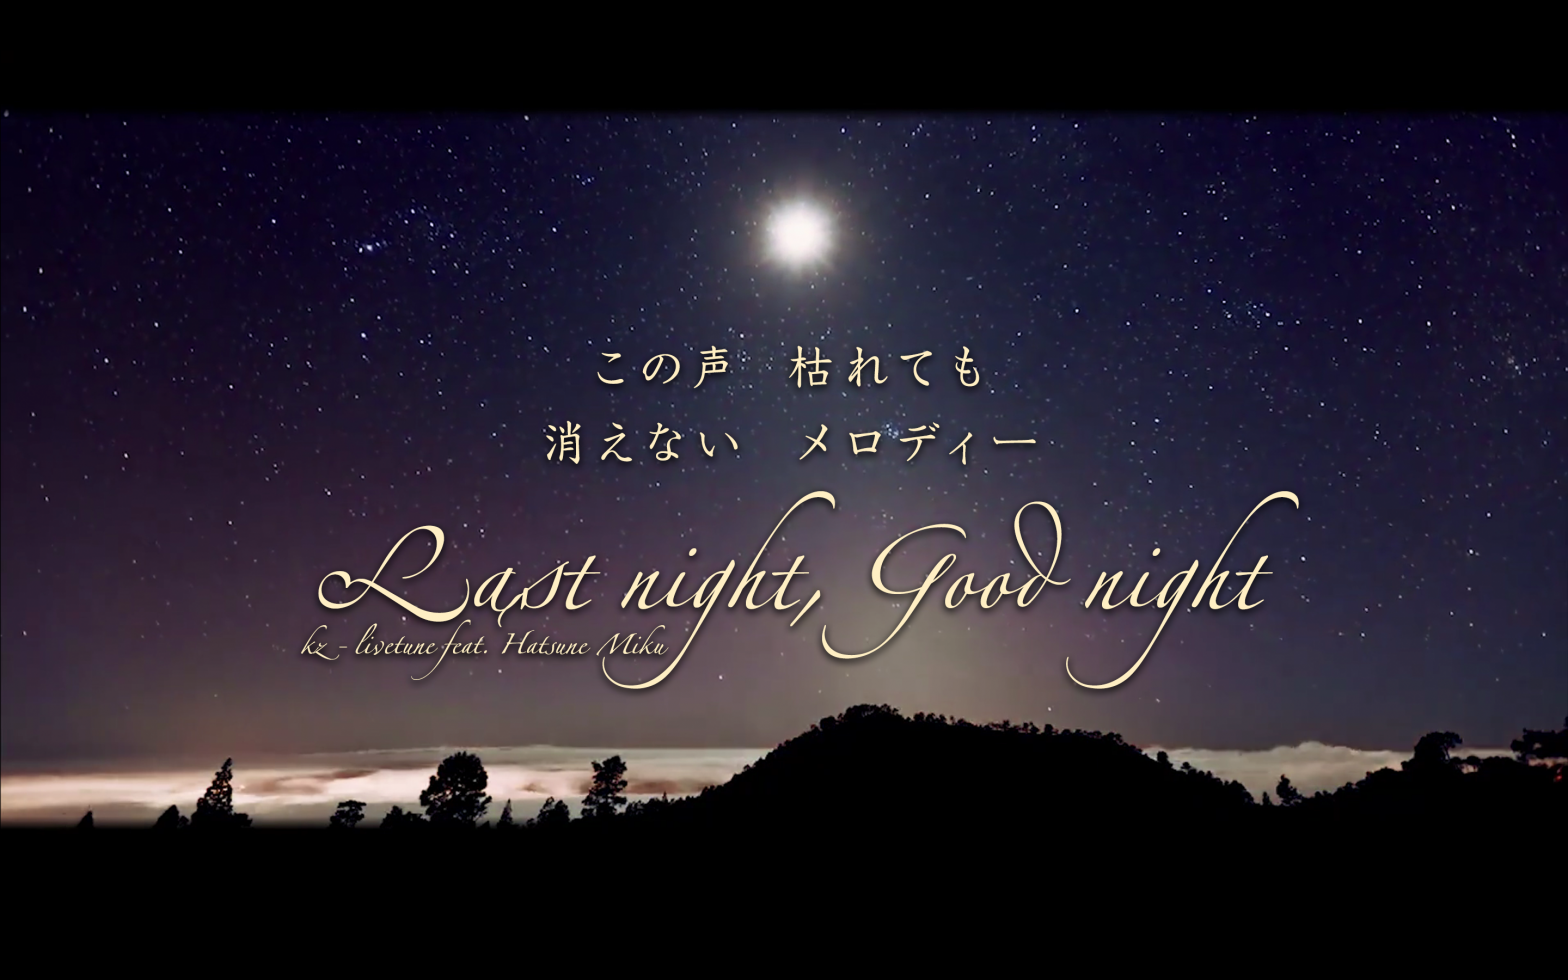 Last night, Good night (jp)